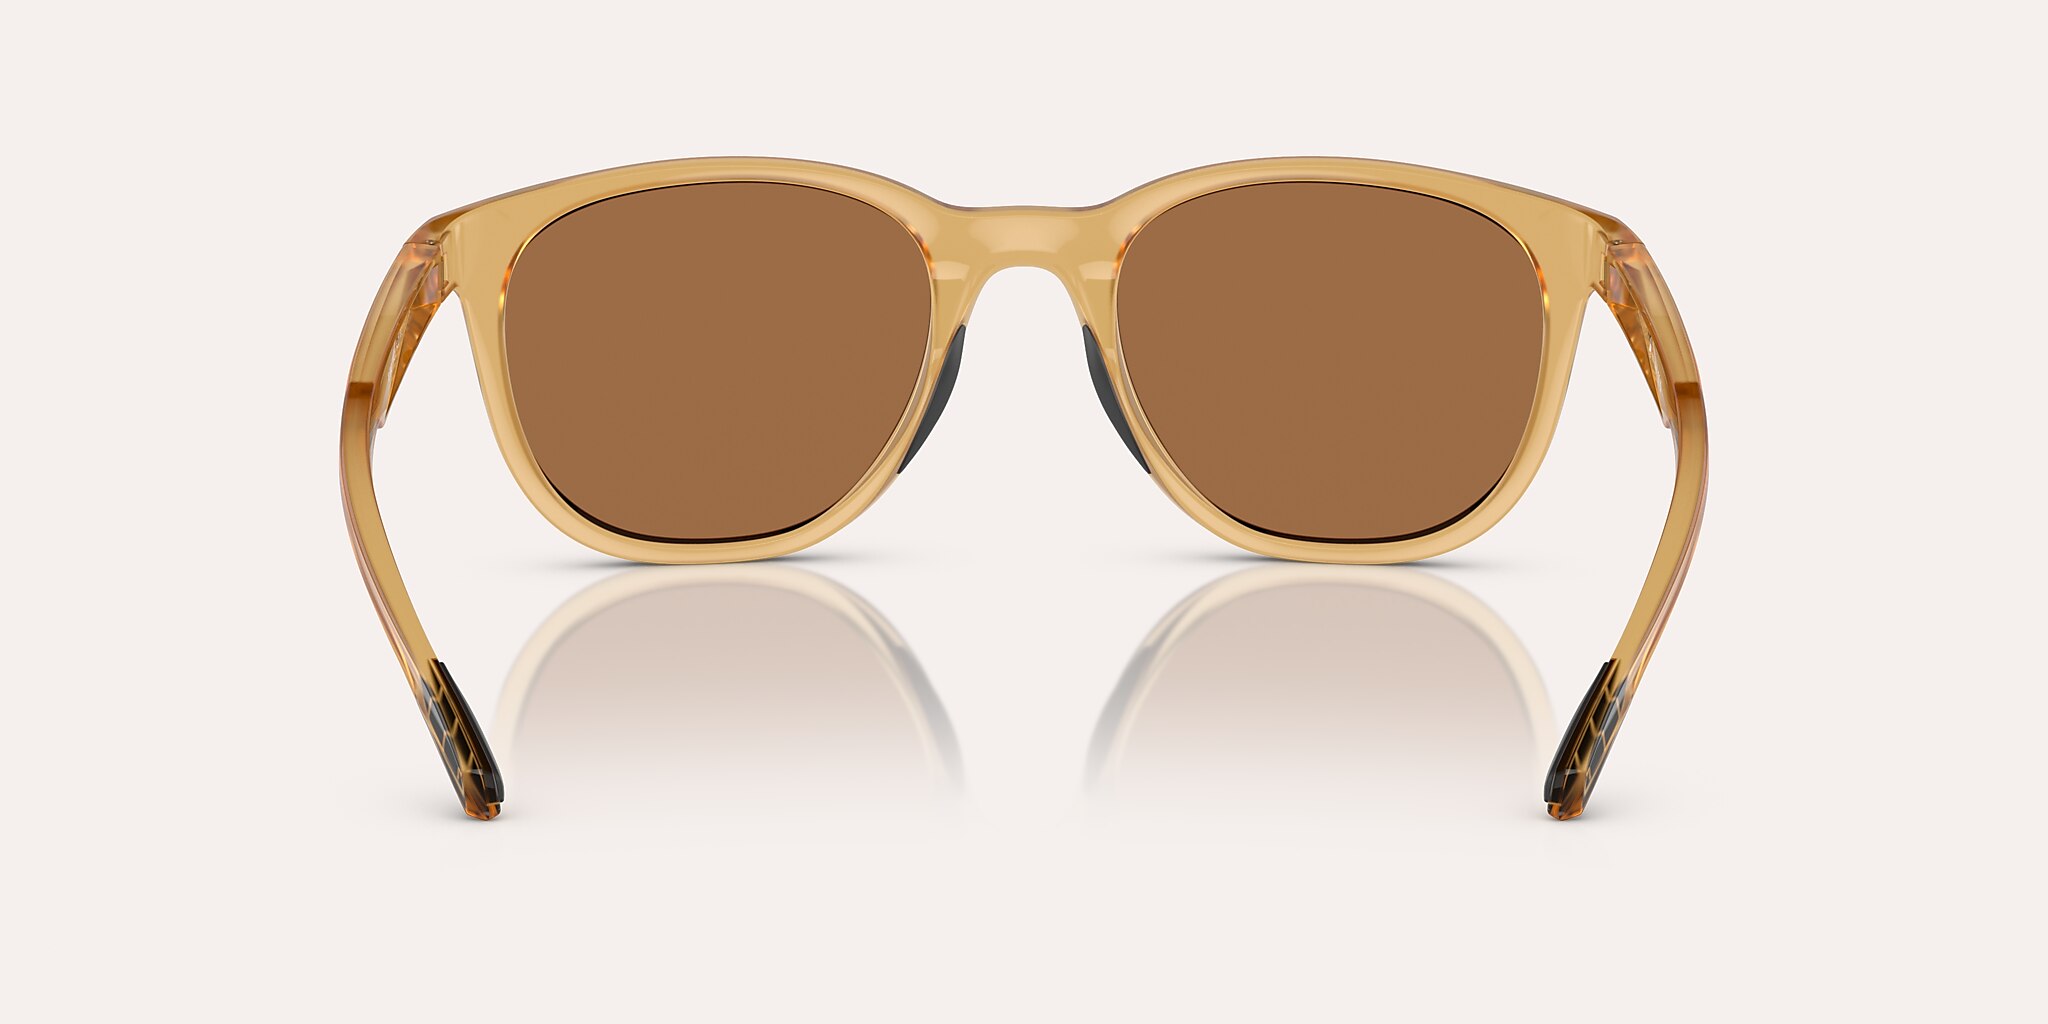 CREEK Men Square Sunglasses Gold, Black Frame (Medium) - Pack of 2